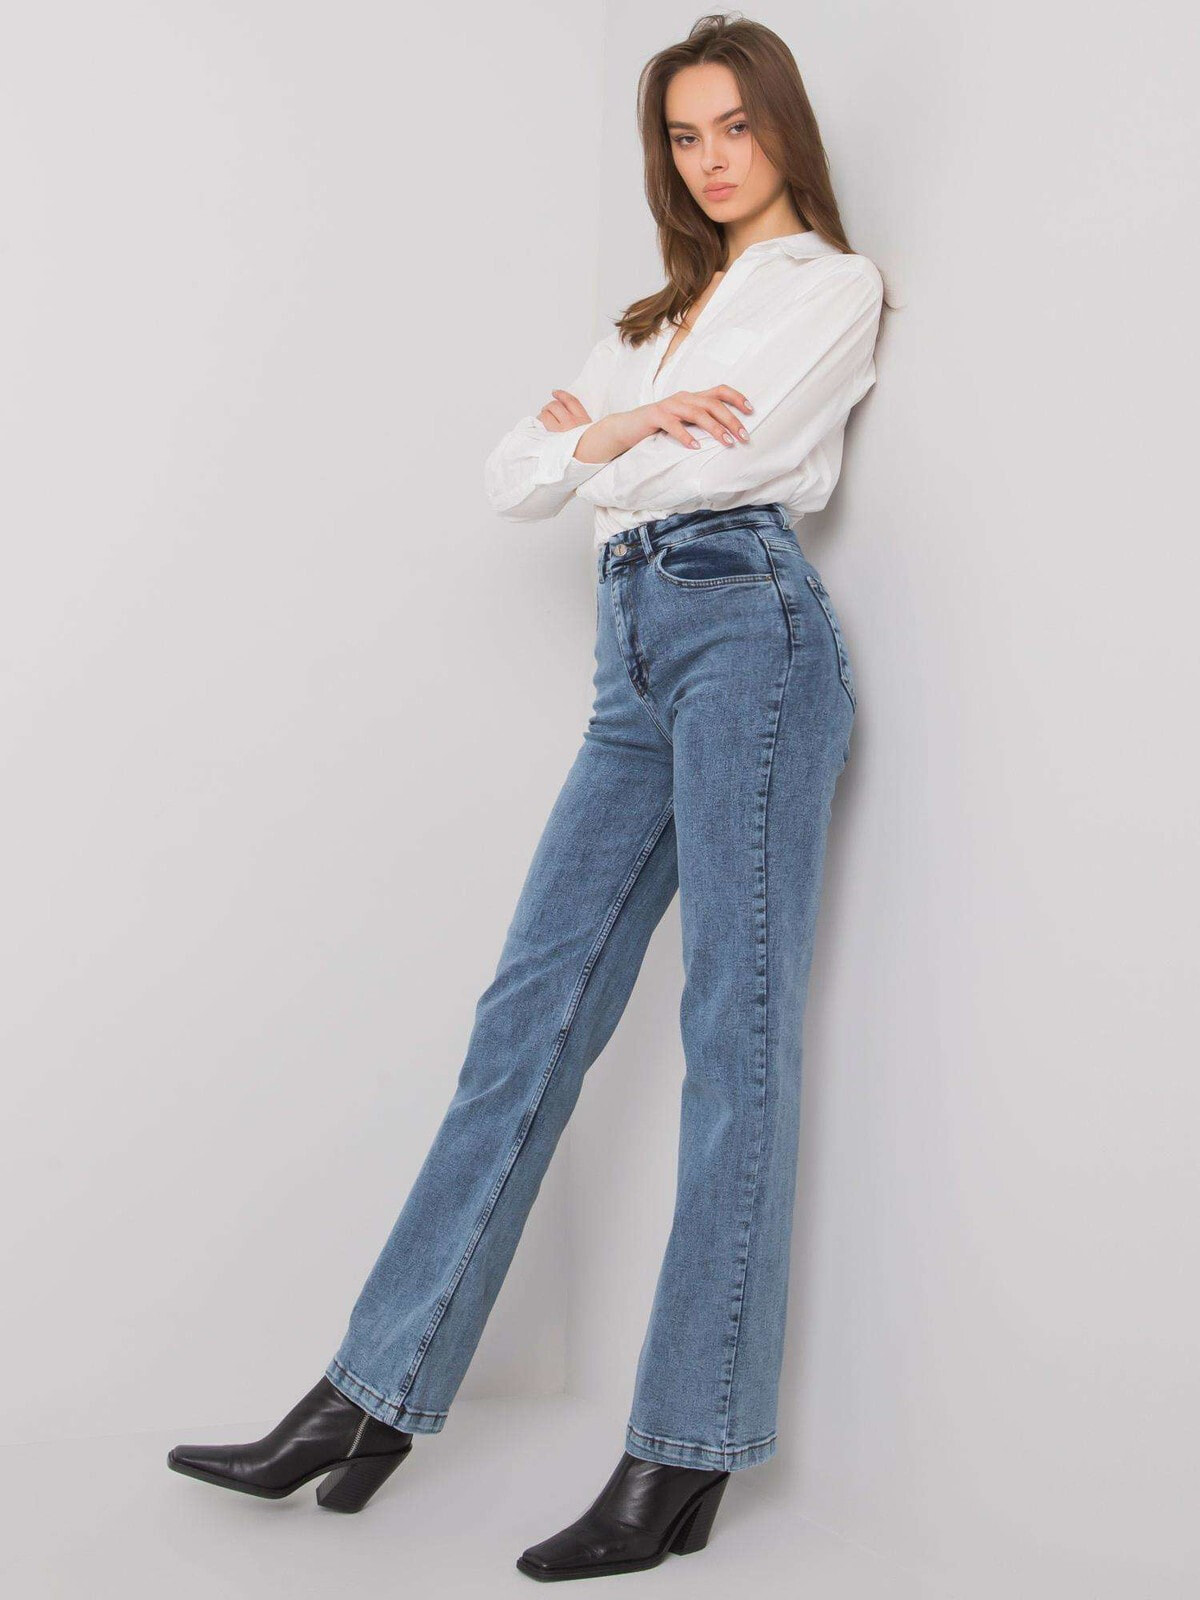 Женские черные джинсы Factory Price Spodnie jeans-MR-SP-351.72P-ciemny niebieski